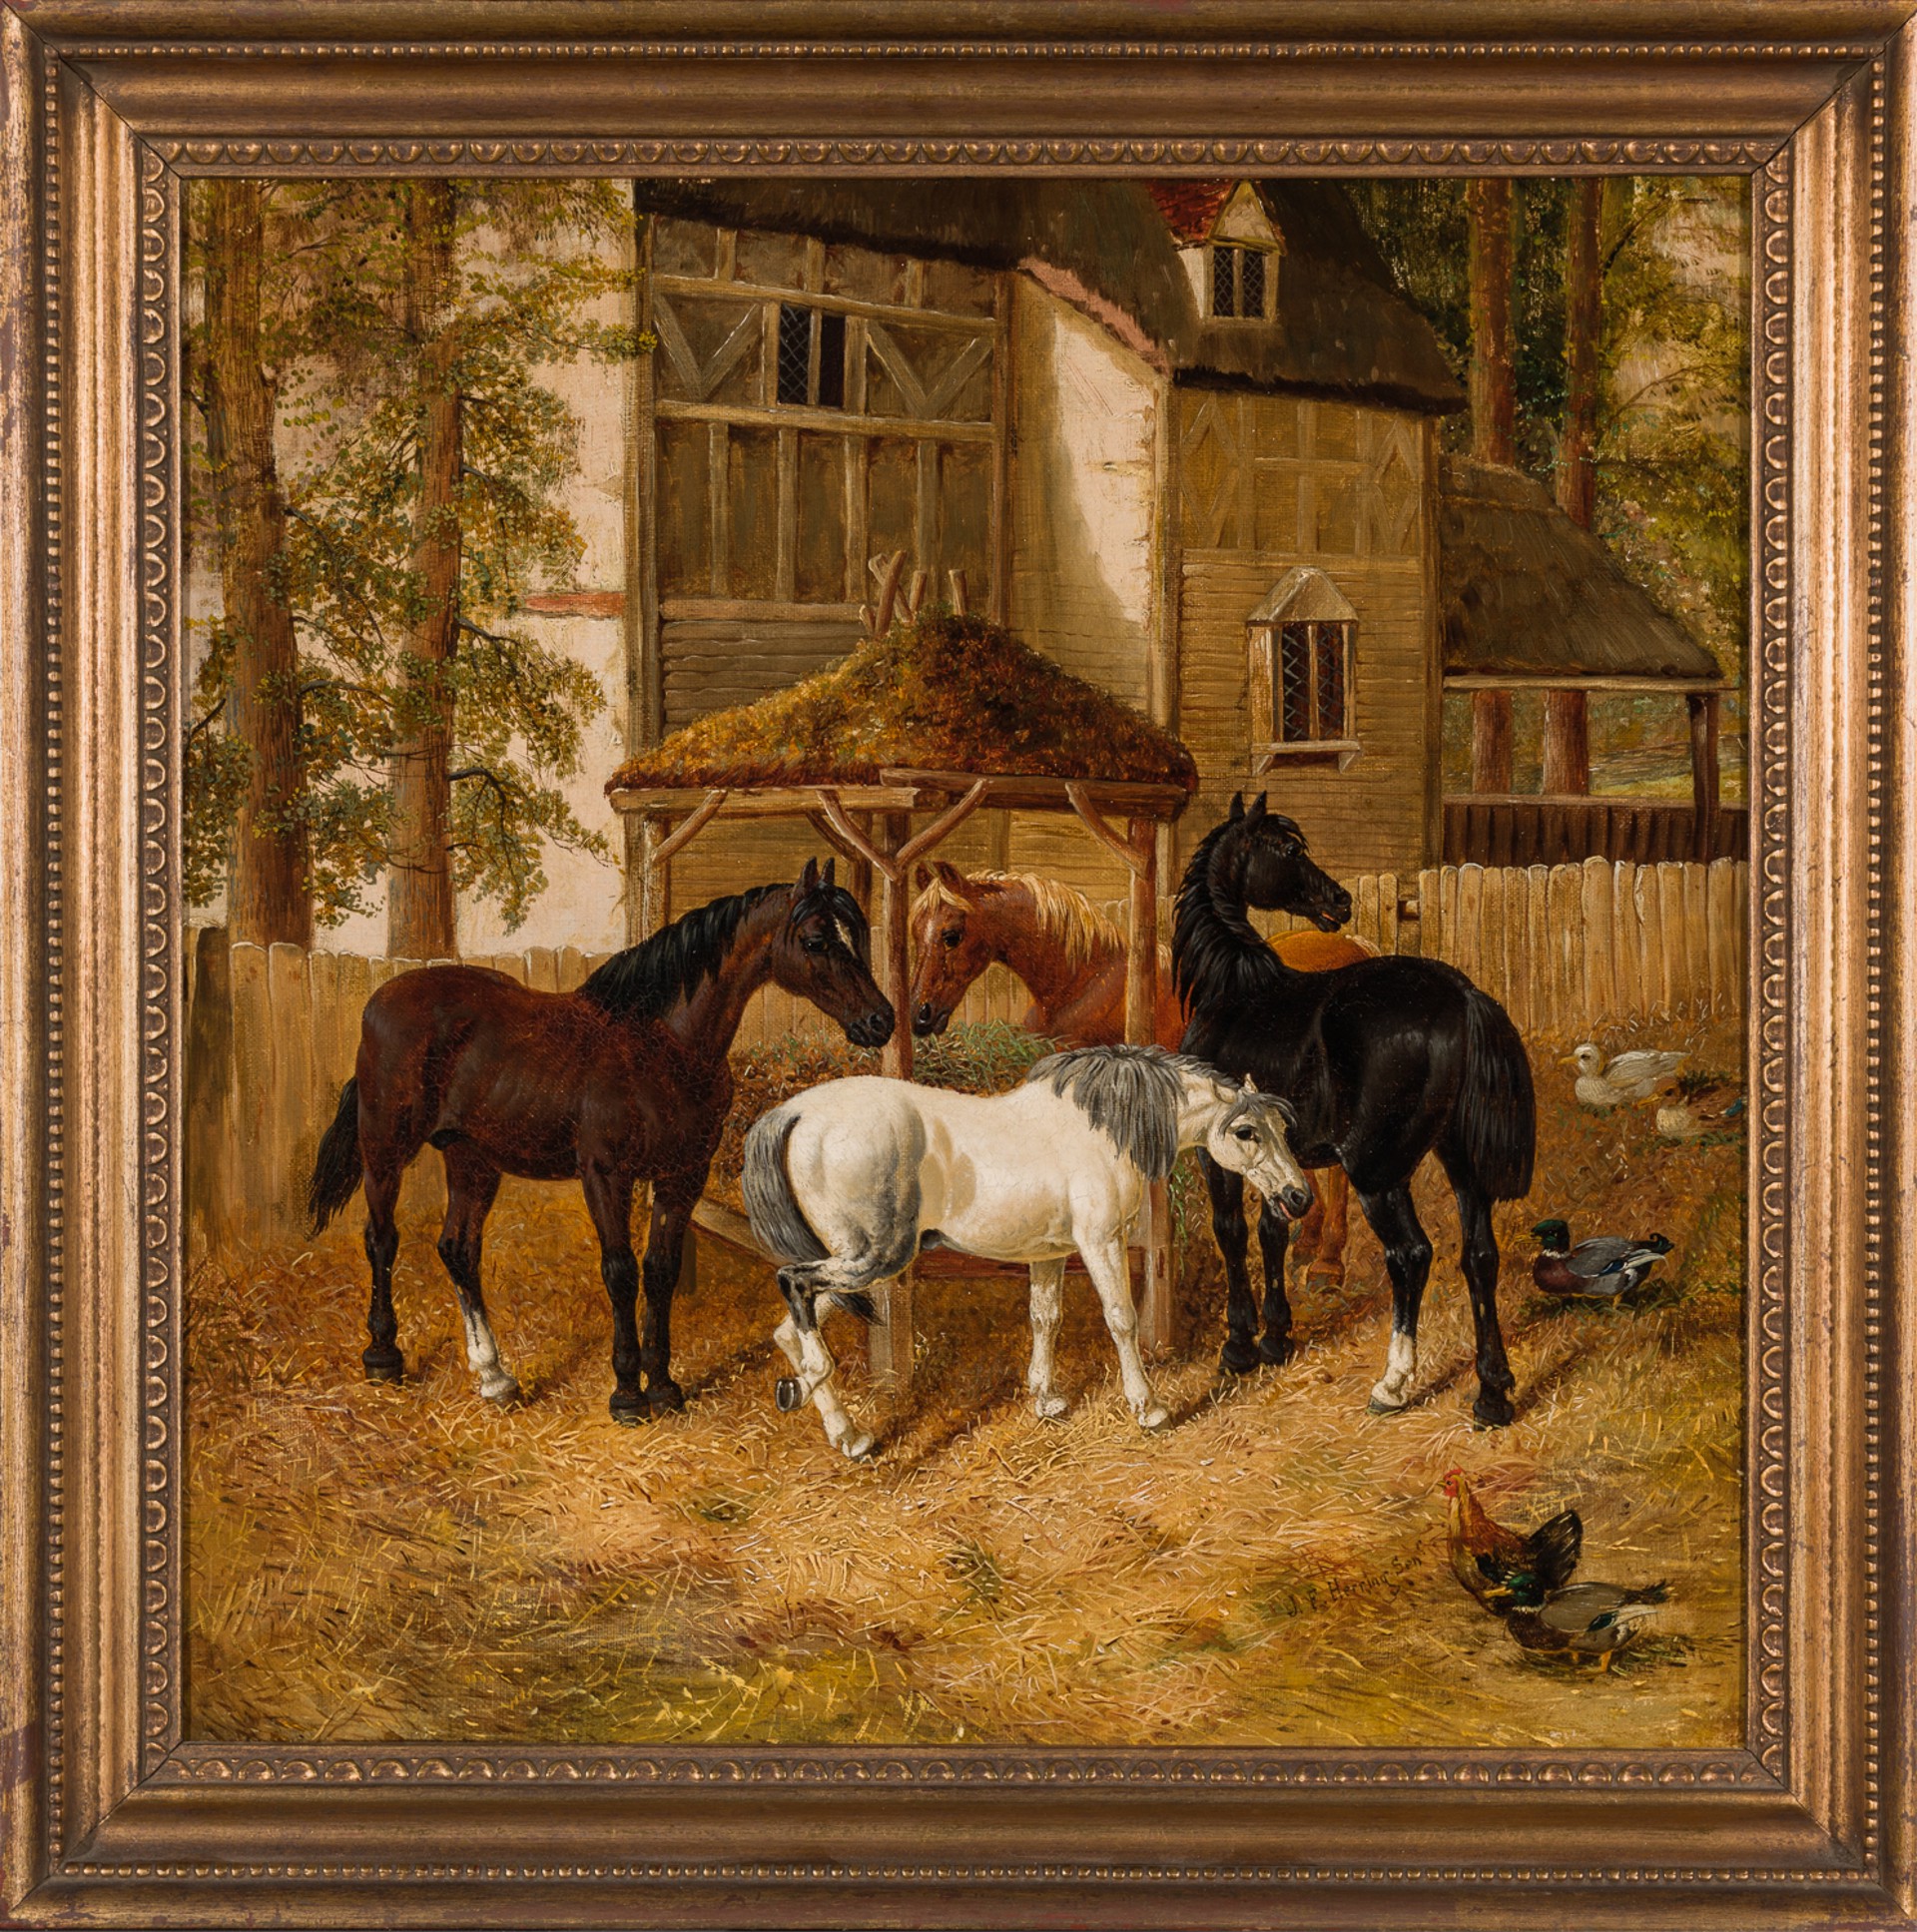 HORSES IN A LANDSCAPE by John Frederick Herring Sr.